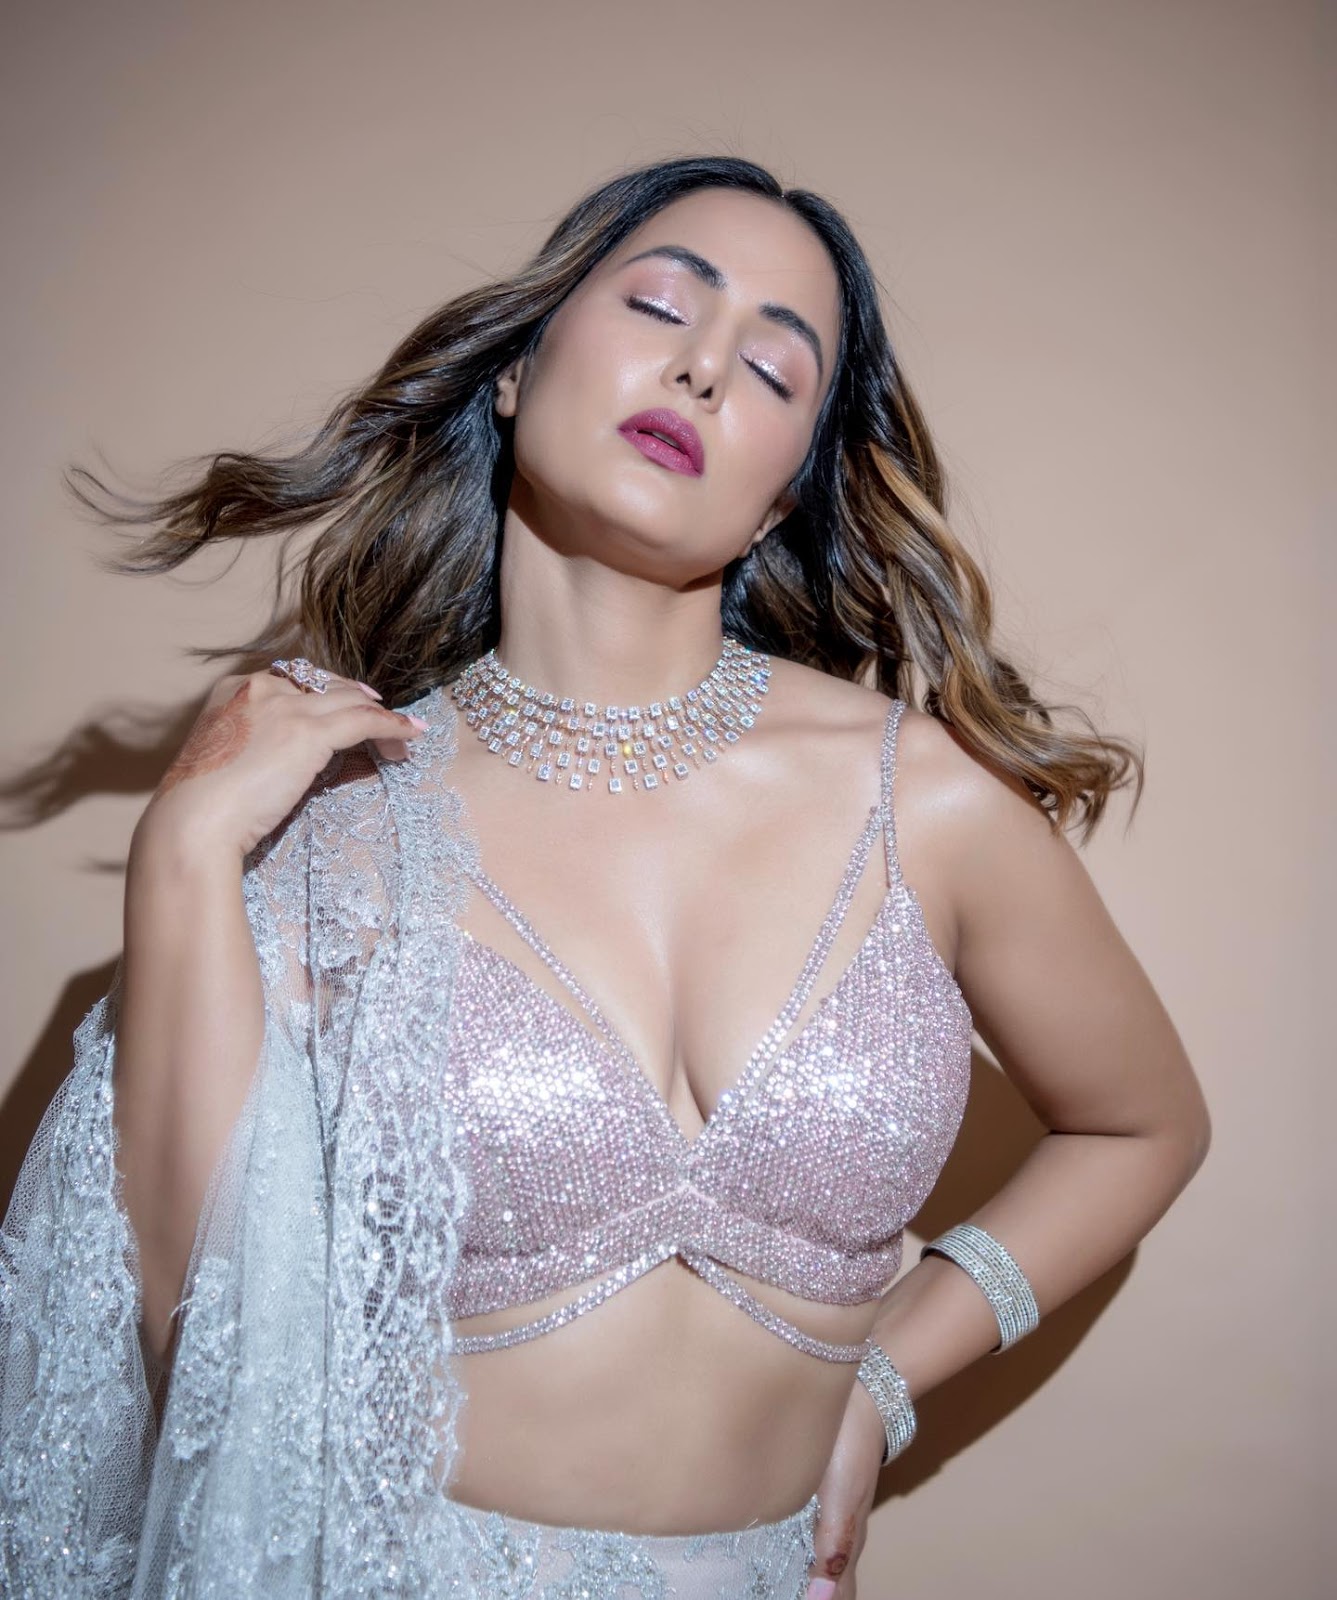 hina khan cleavage tiny bralette hot actress